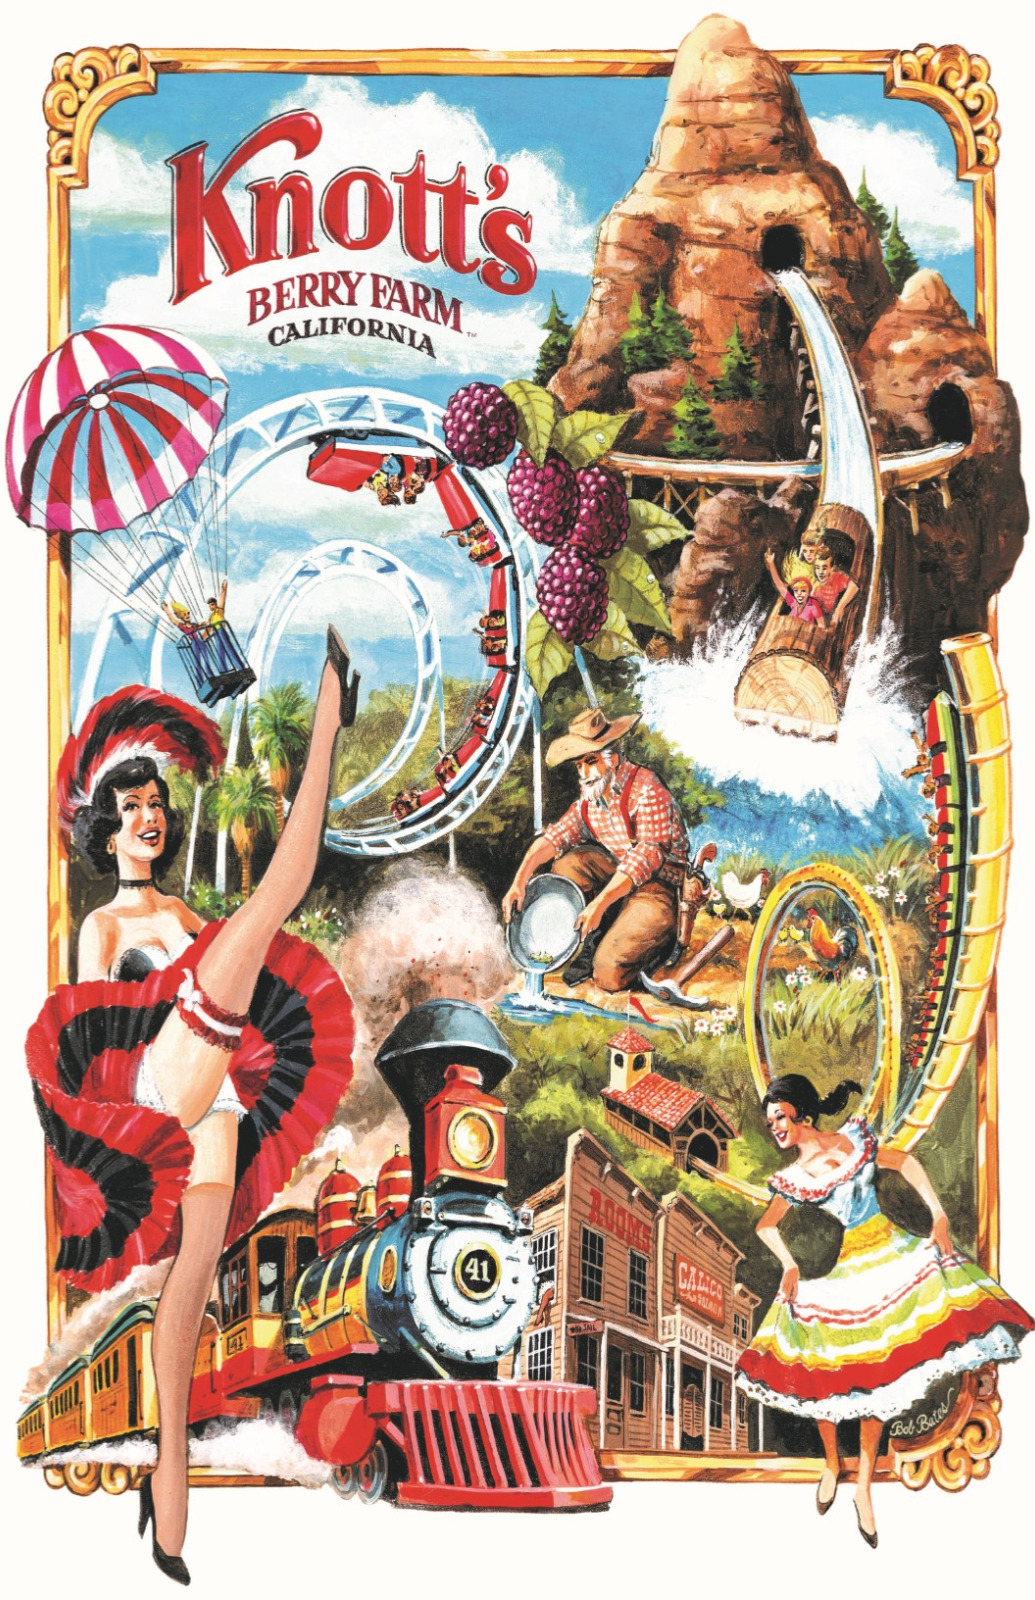 Knott's Berry Farm 70s Retro Advertisement Poster Print 11x17 Log Ride Corkscrew